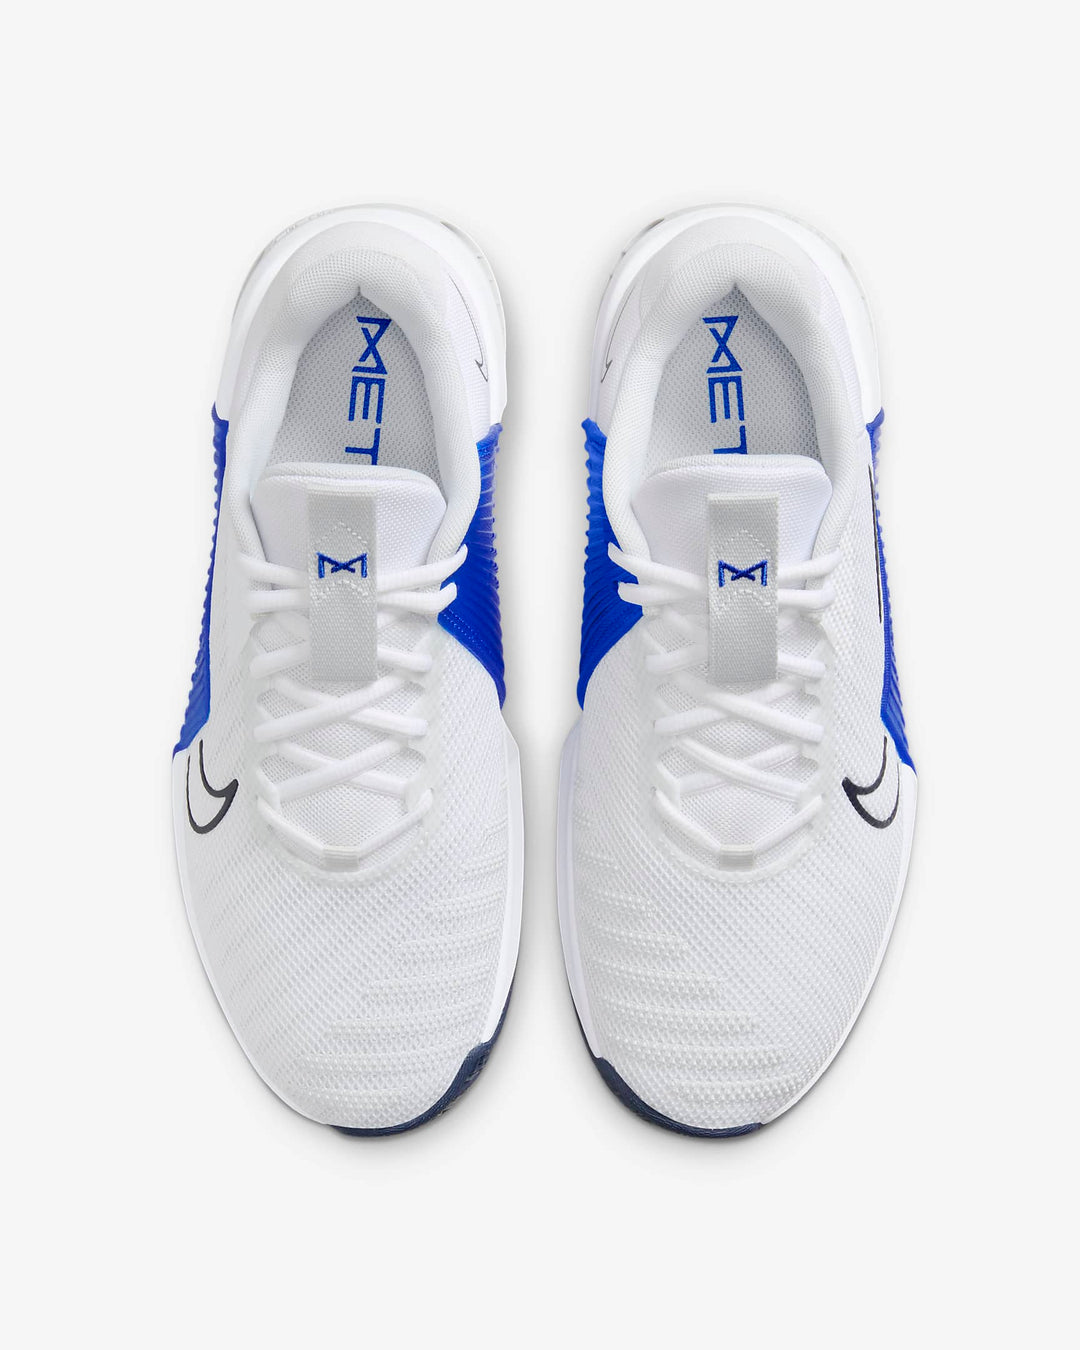 Giày Nike Metcon 9 Men Workout Shoes #Racer Blue